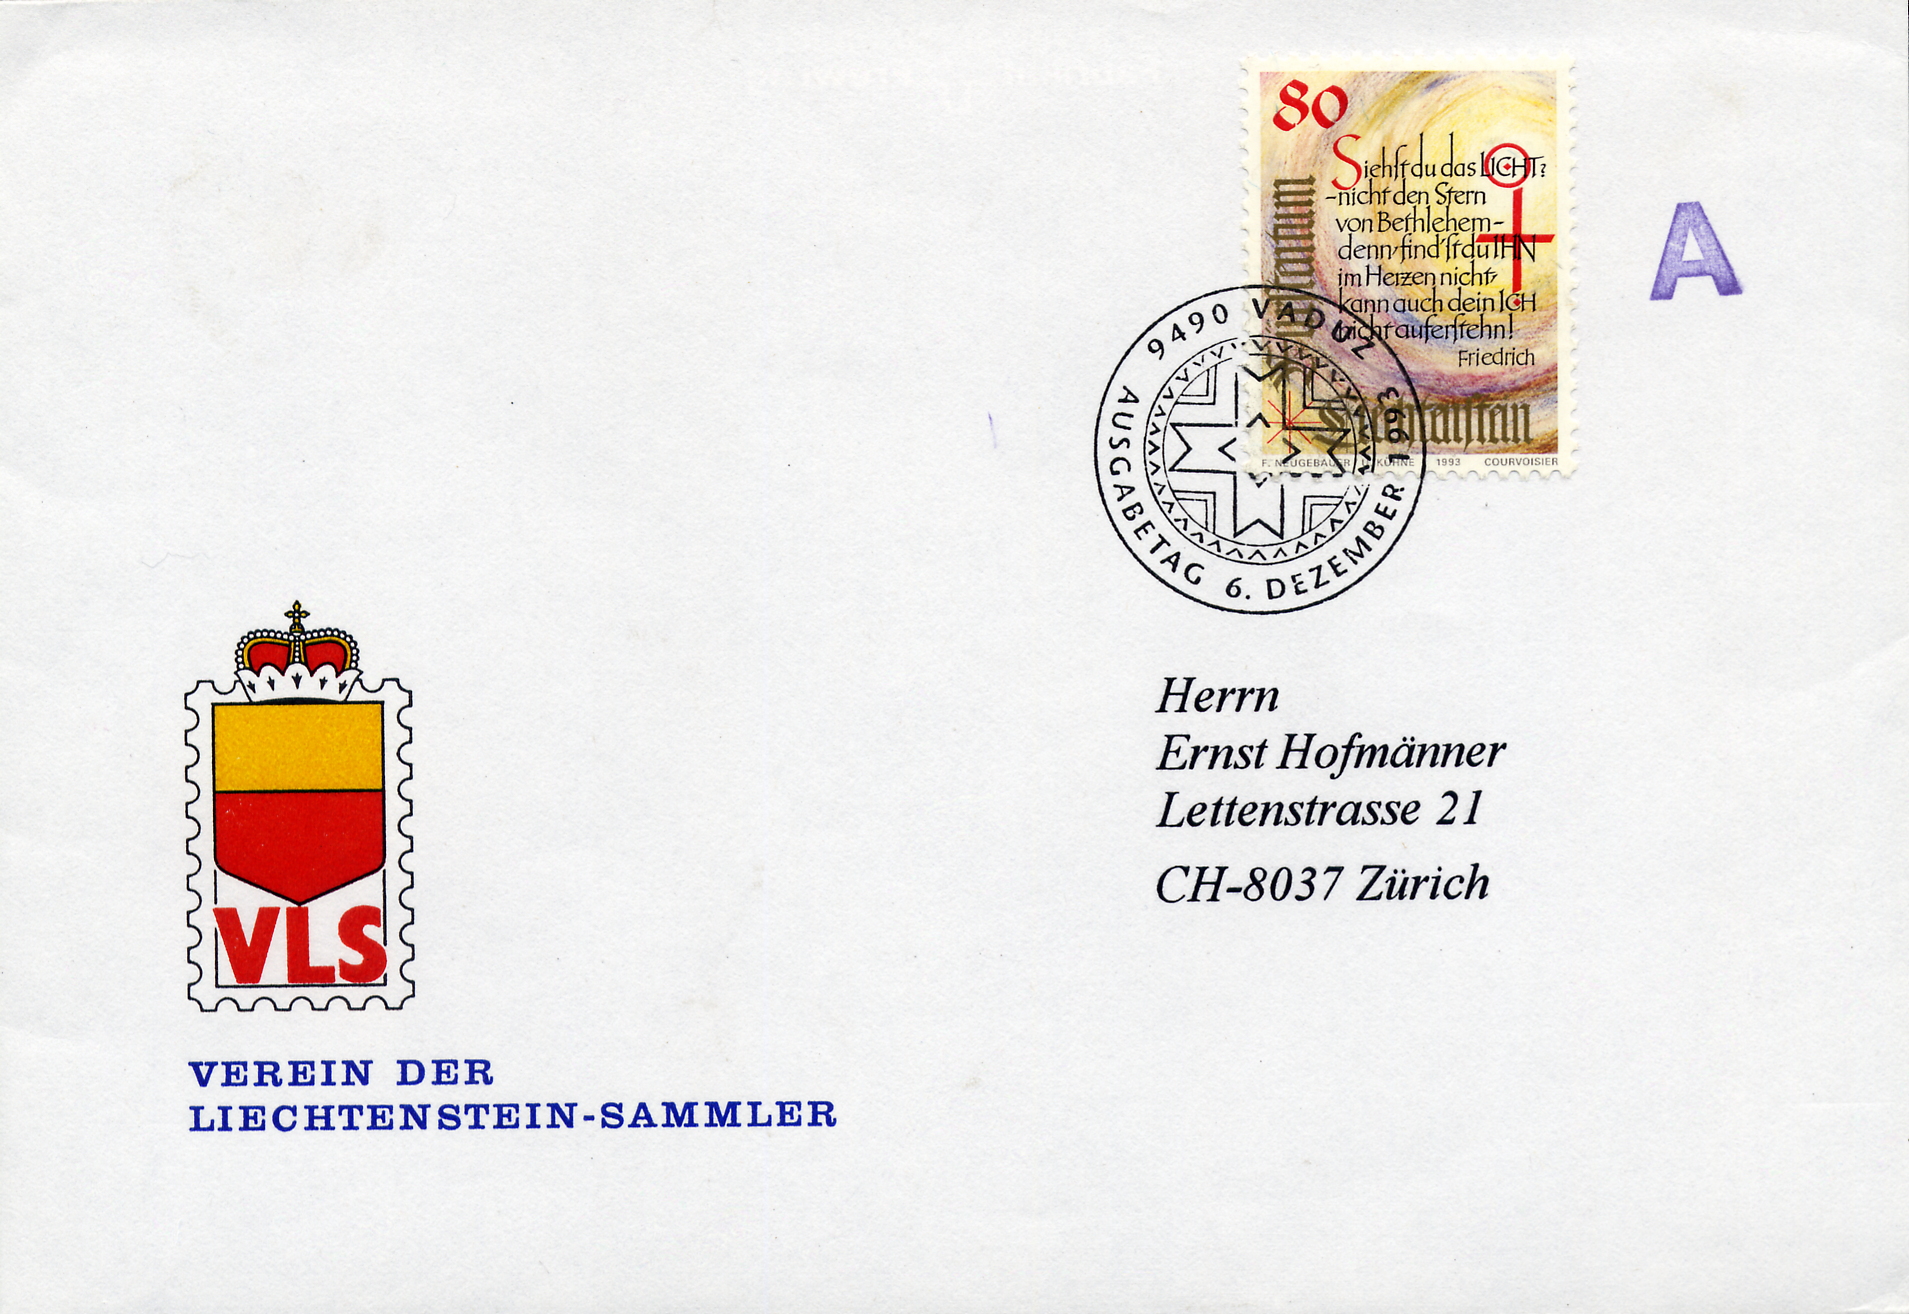 https://swiss-stamps.org/wp-content/uploads/2023/12/1993-12-VLS-Vaduz.jpg